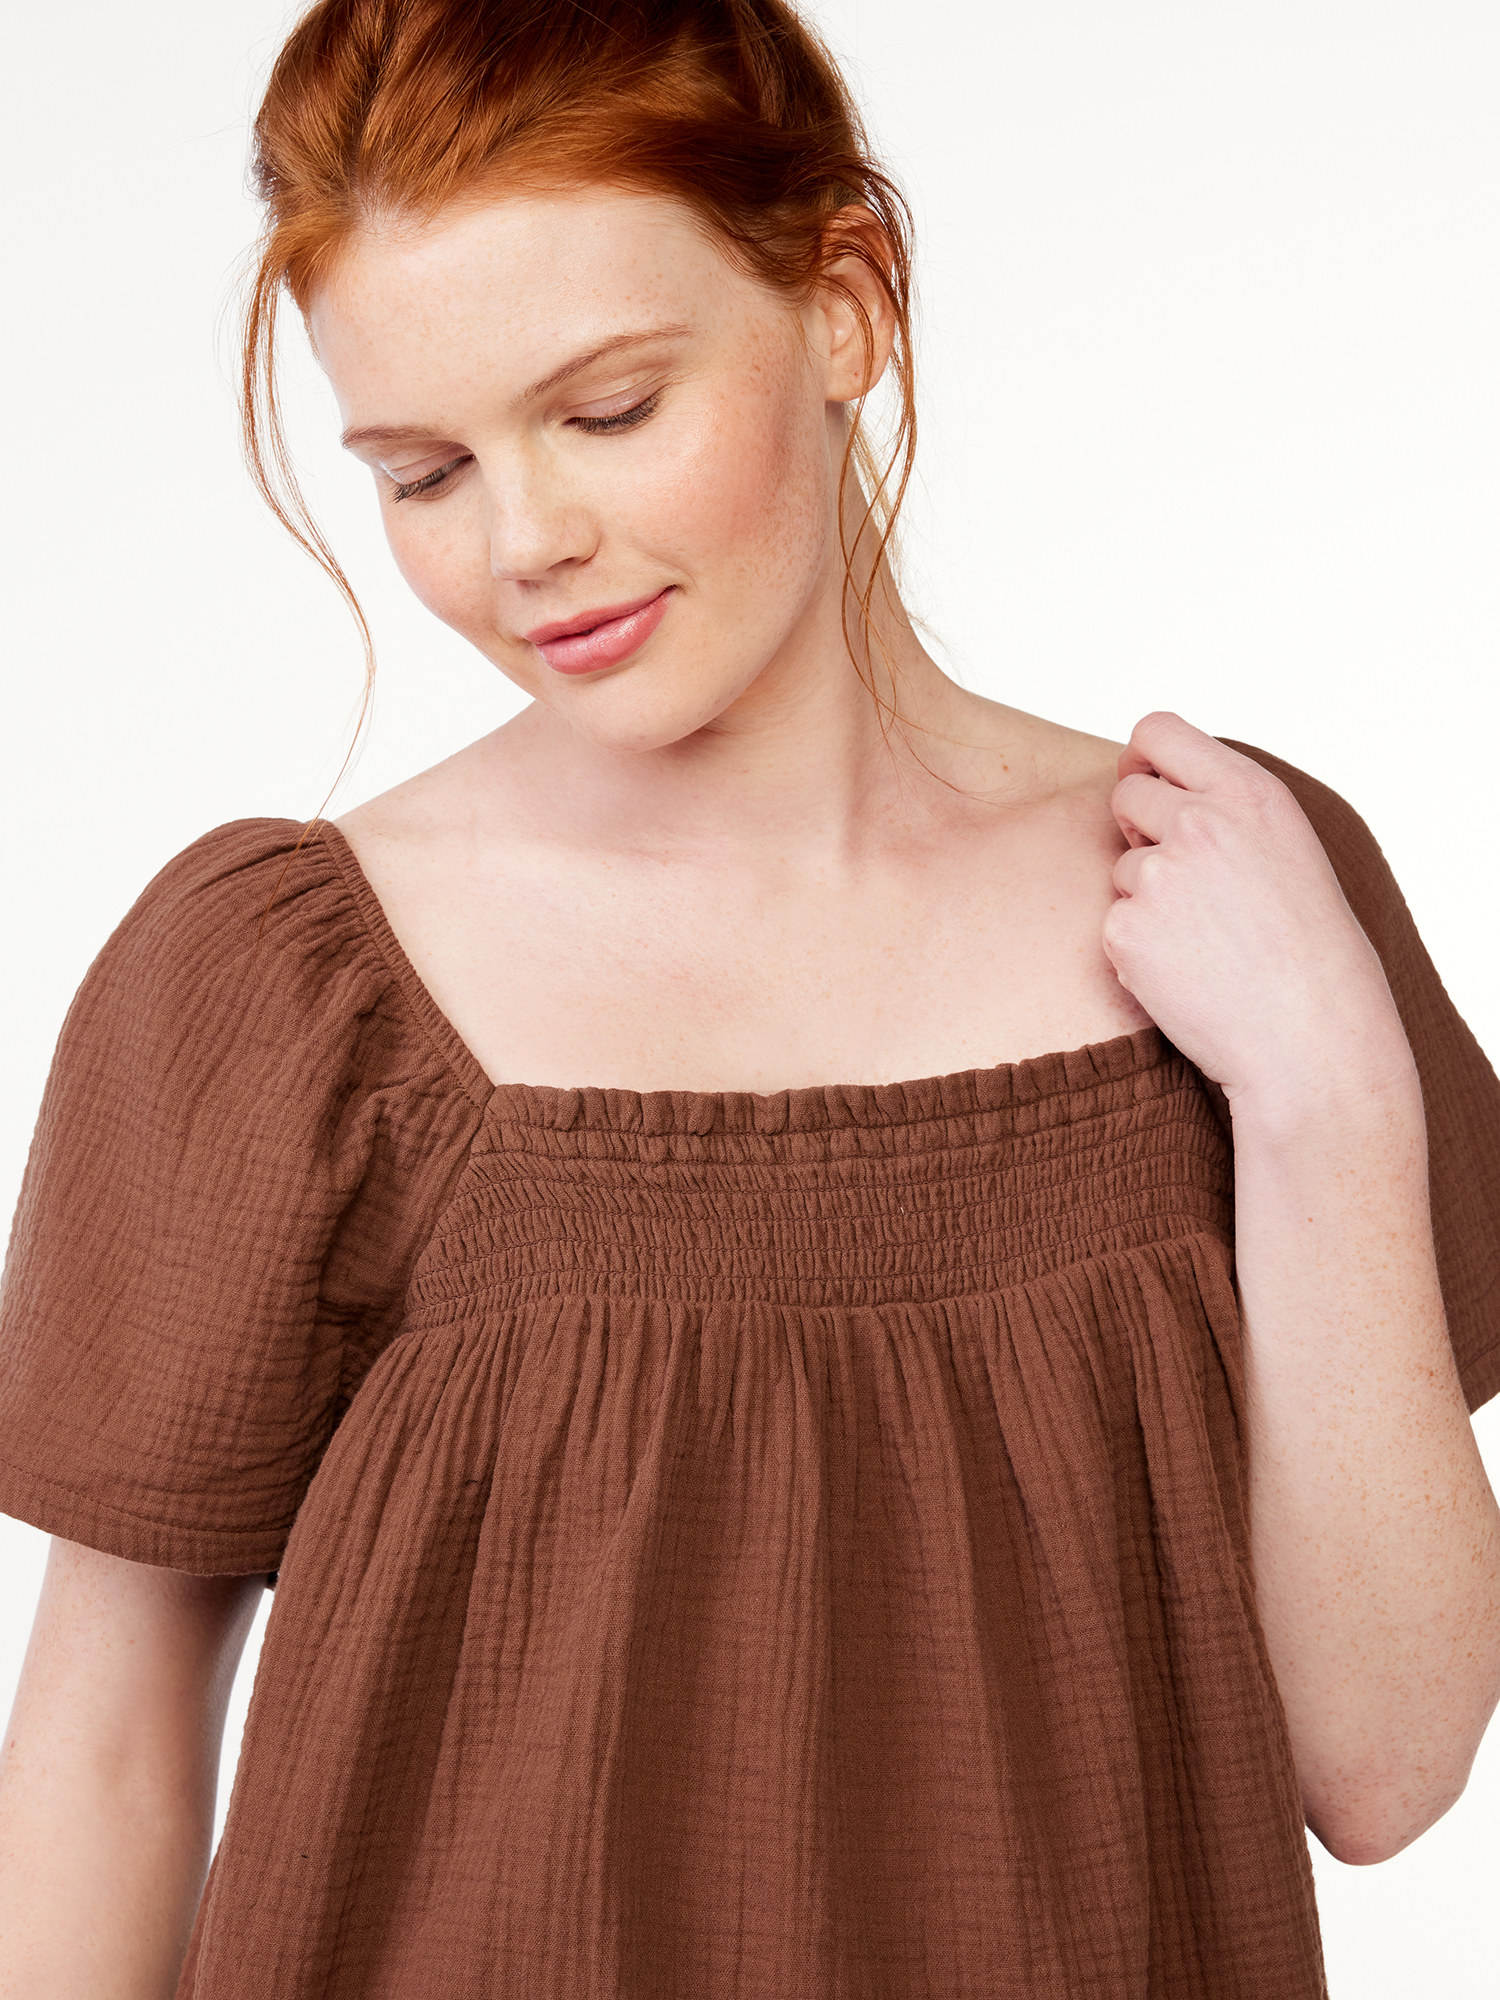 Joyspun Women's Puff Sleeve Gauze Sleep Top, Sizes S to 3X - image 4 of 5